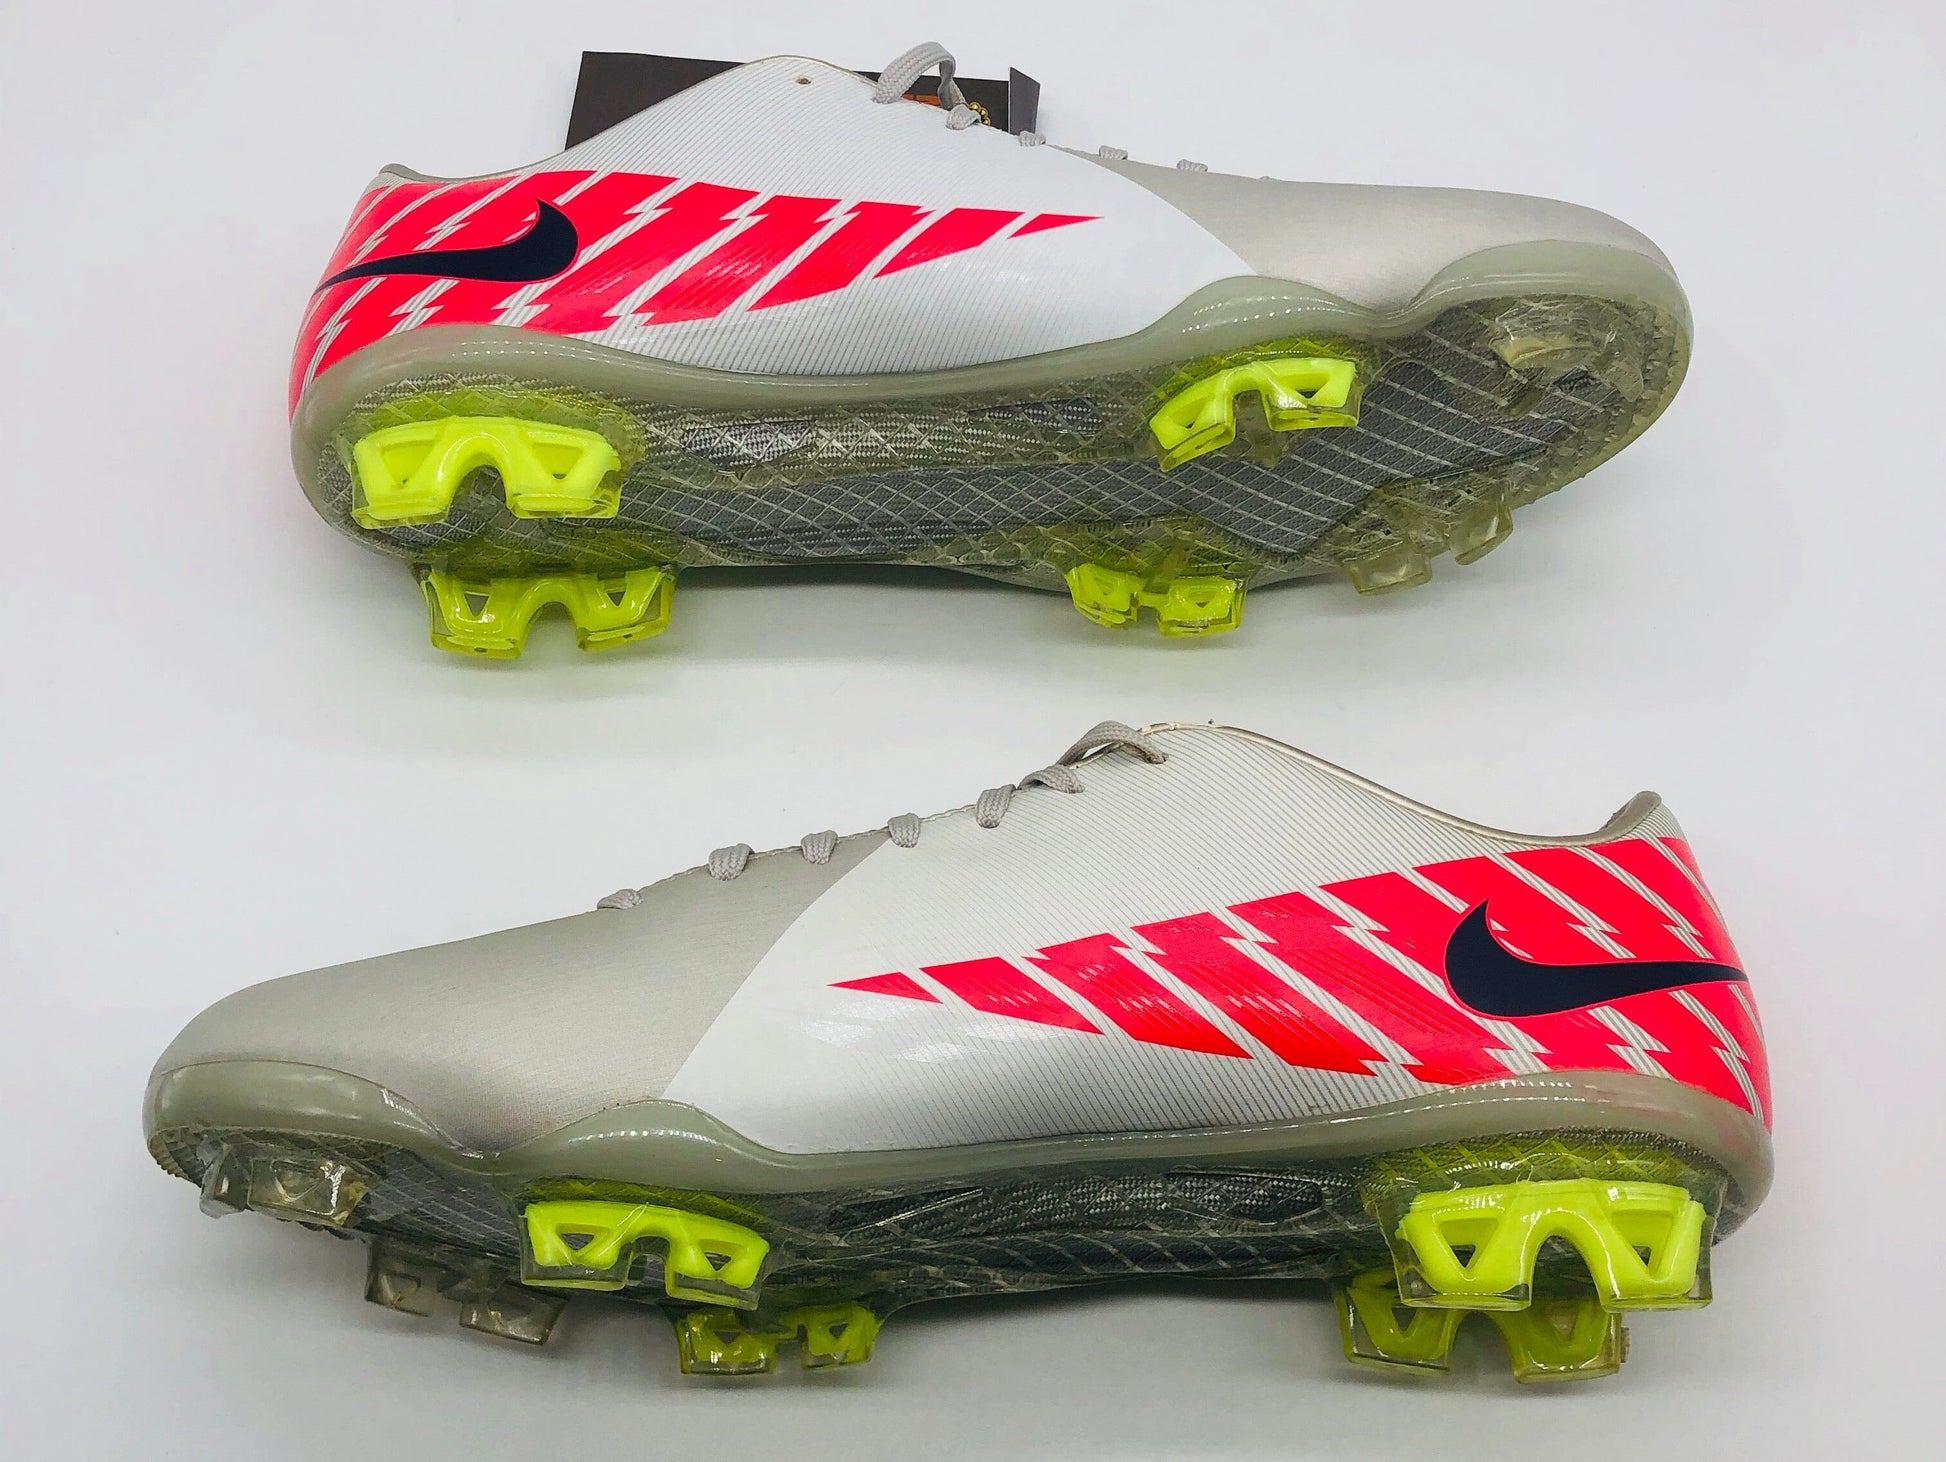 Nike Vapor VII Football Boots Ltd